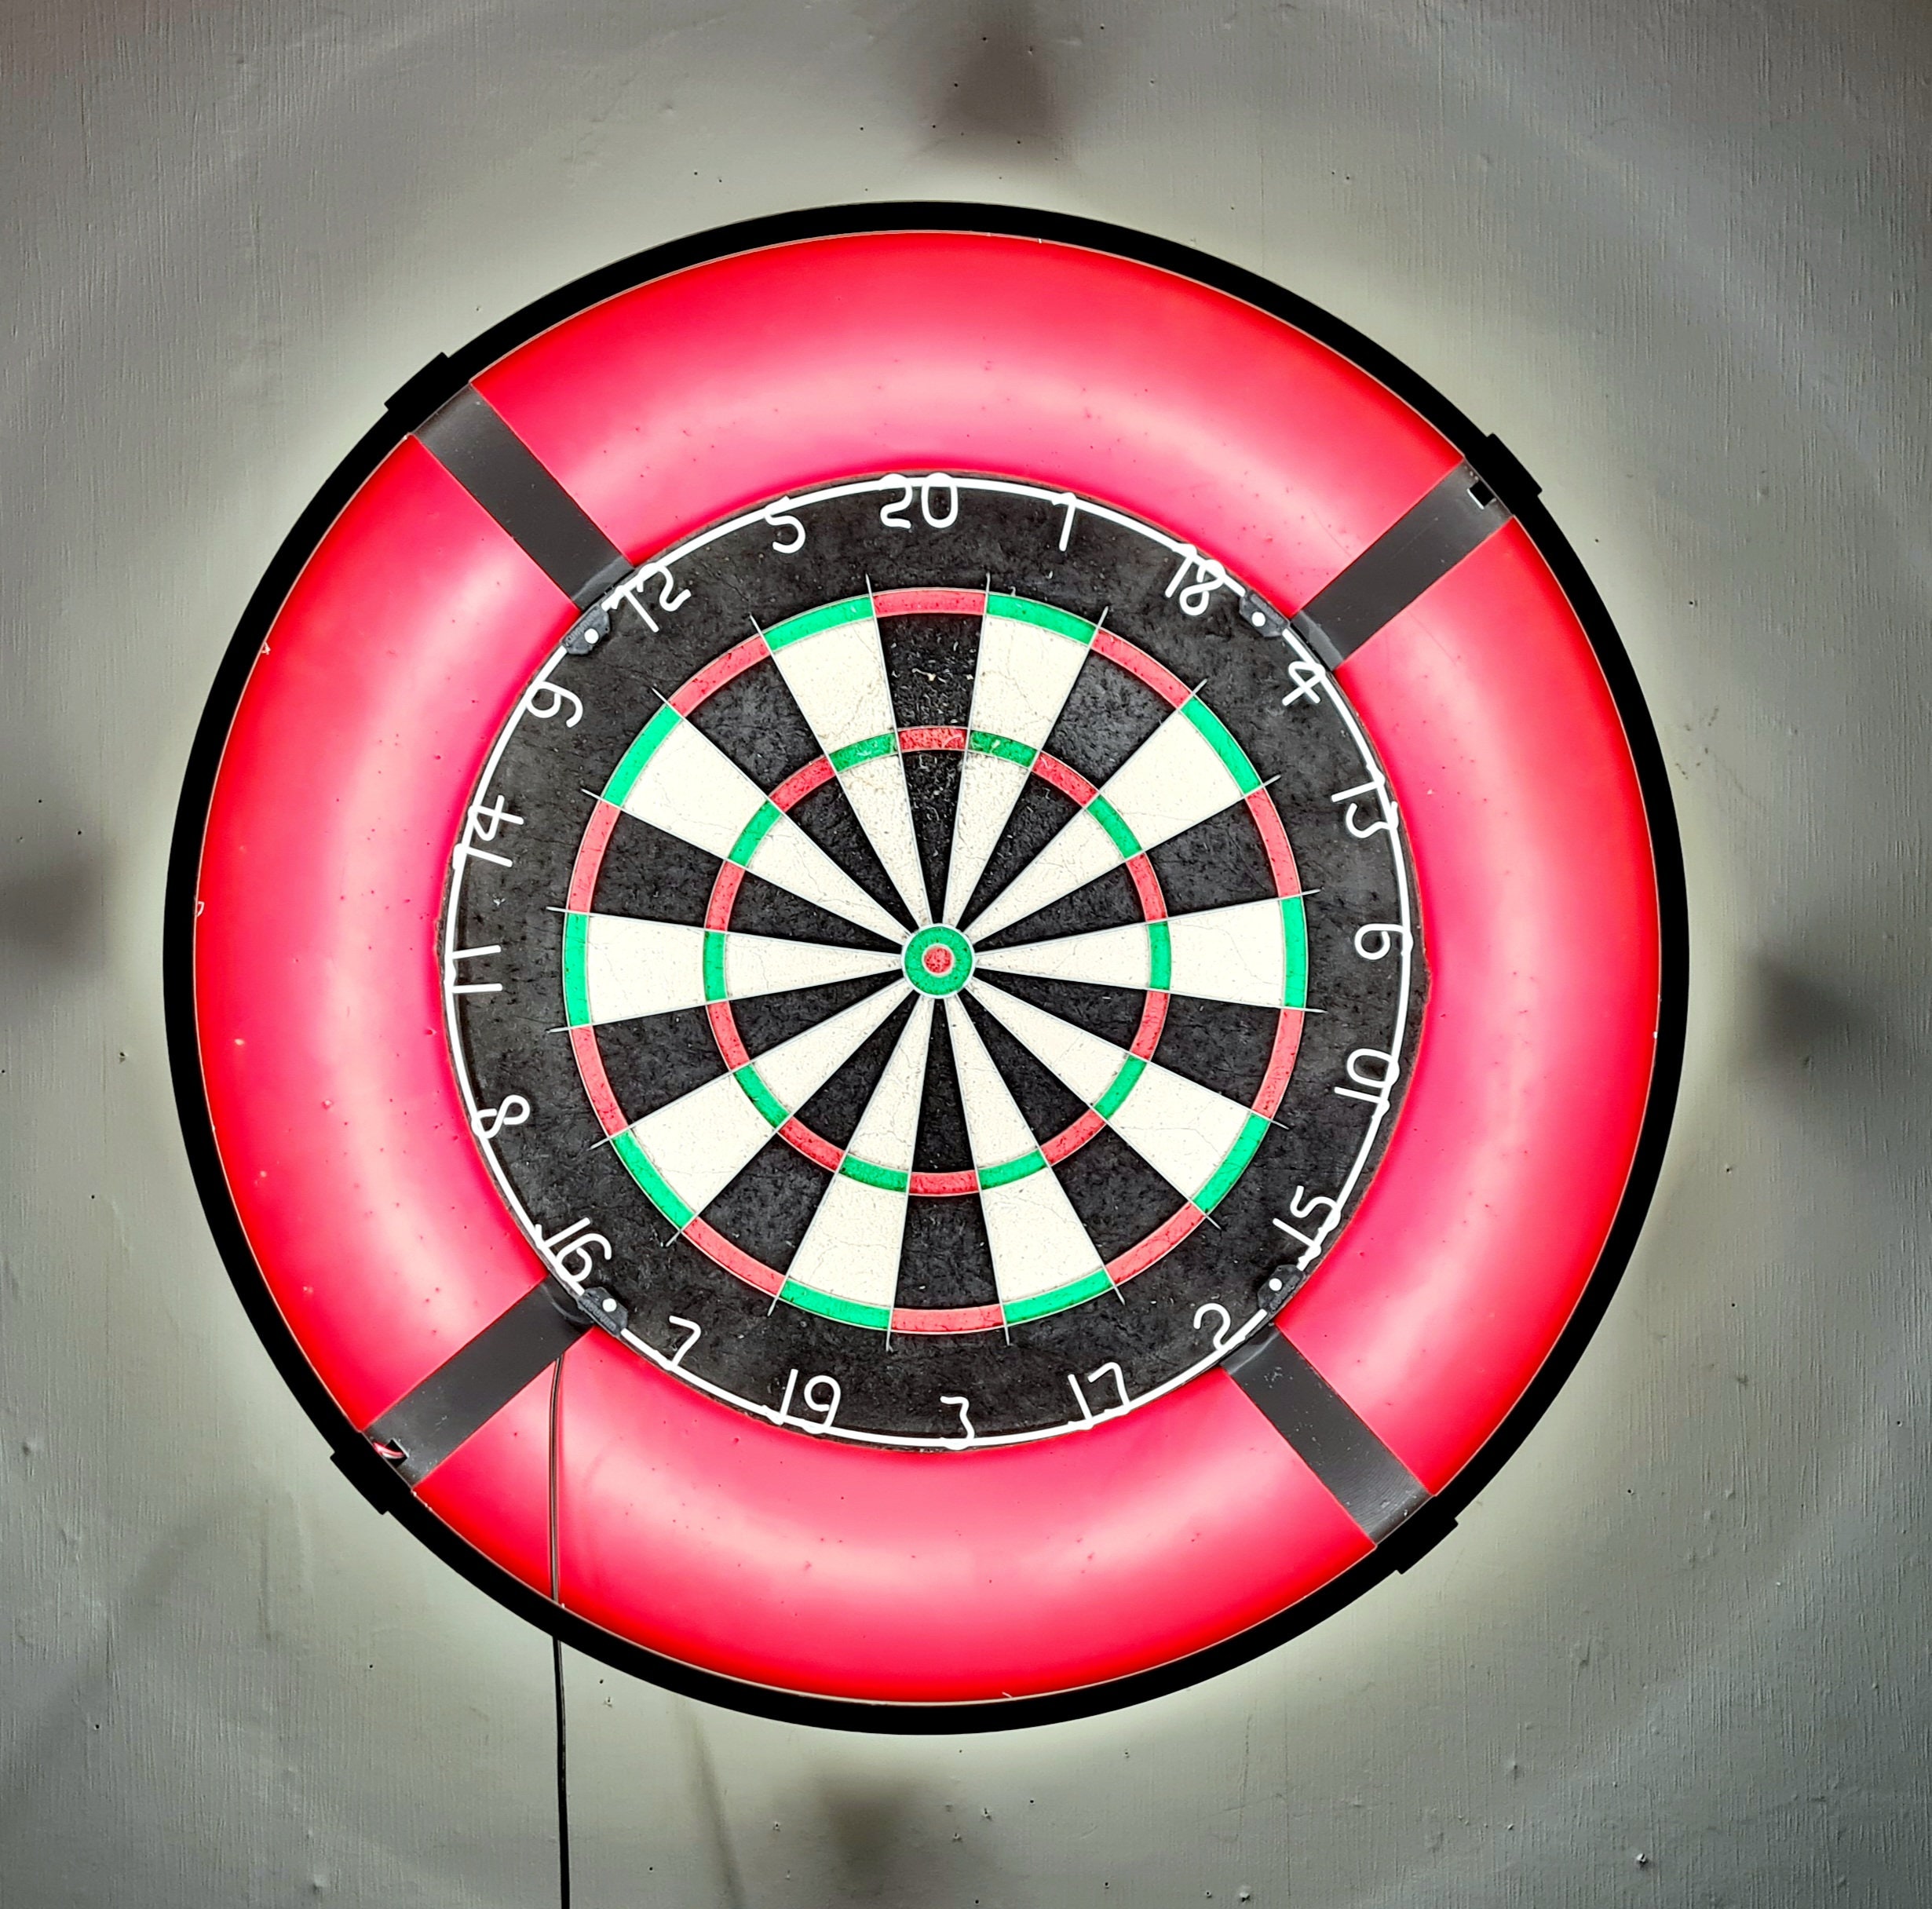 Led lighted darts